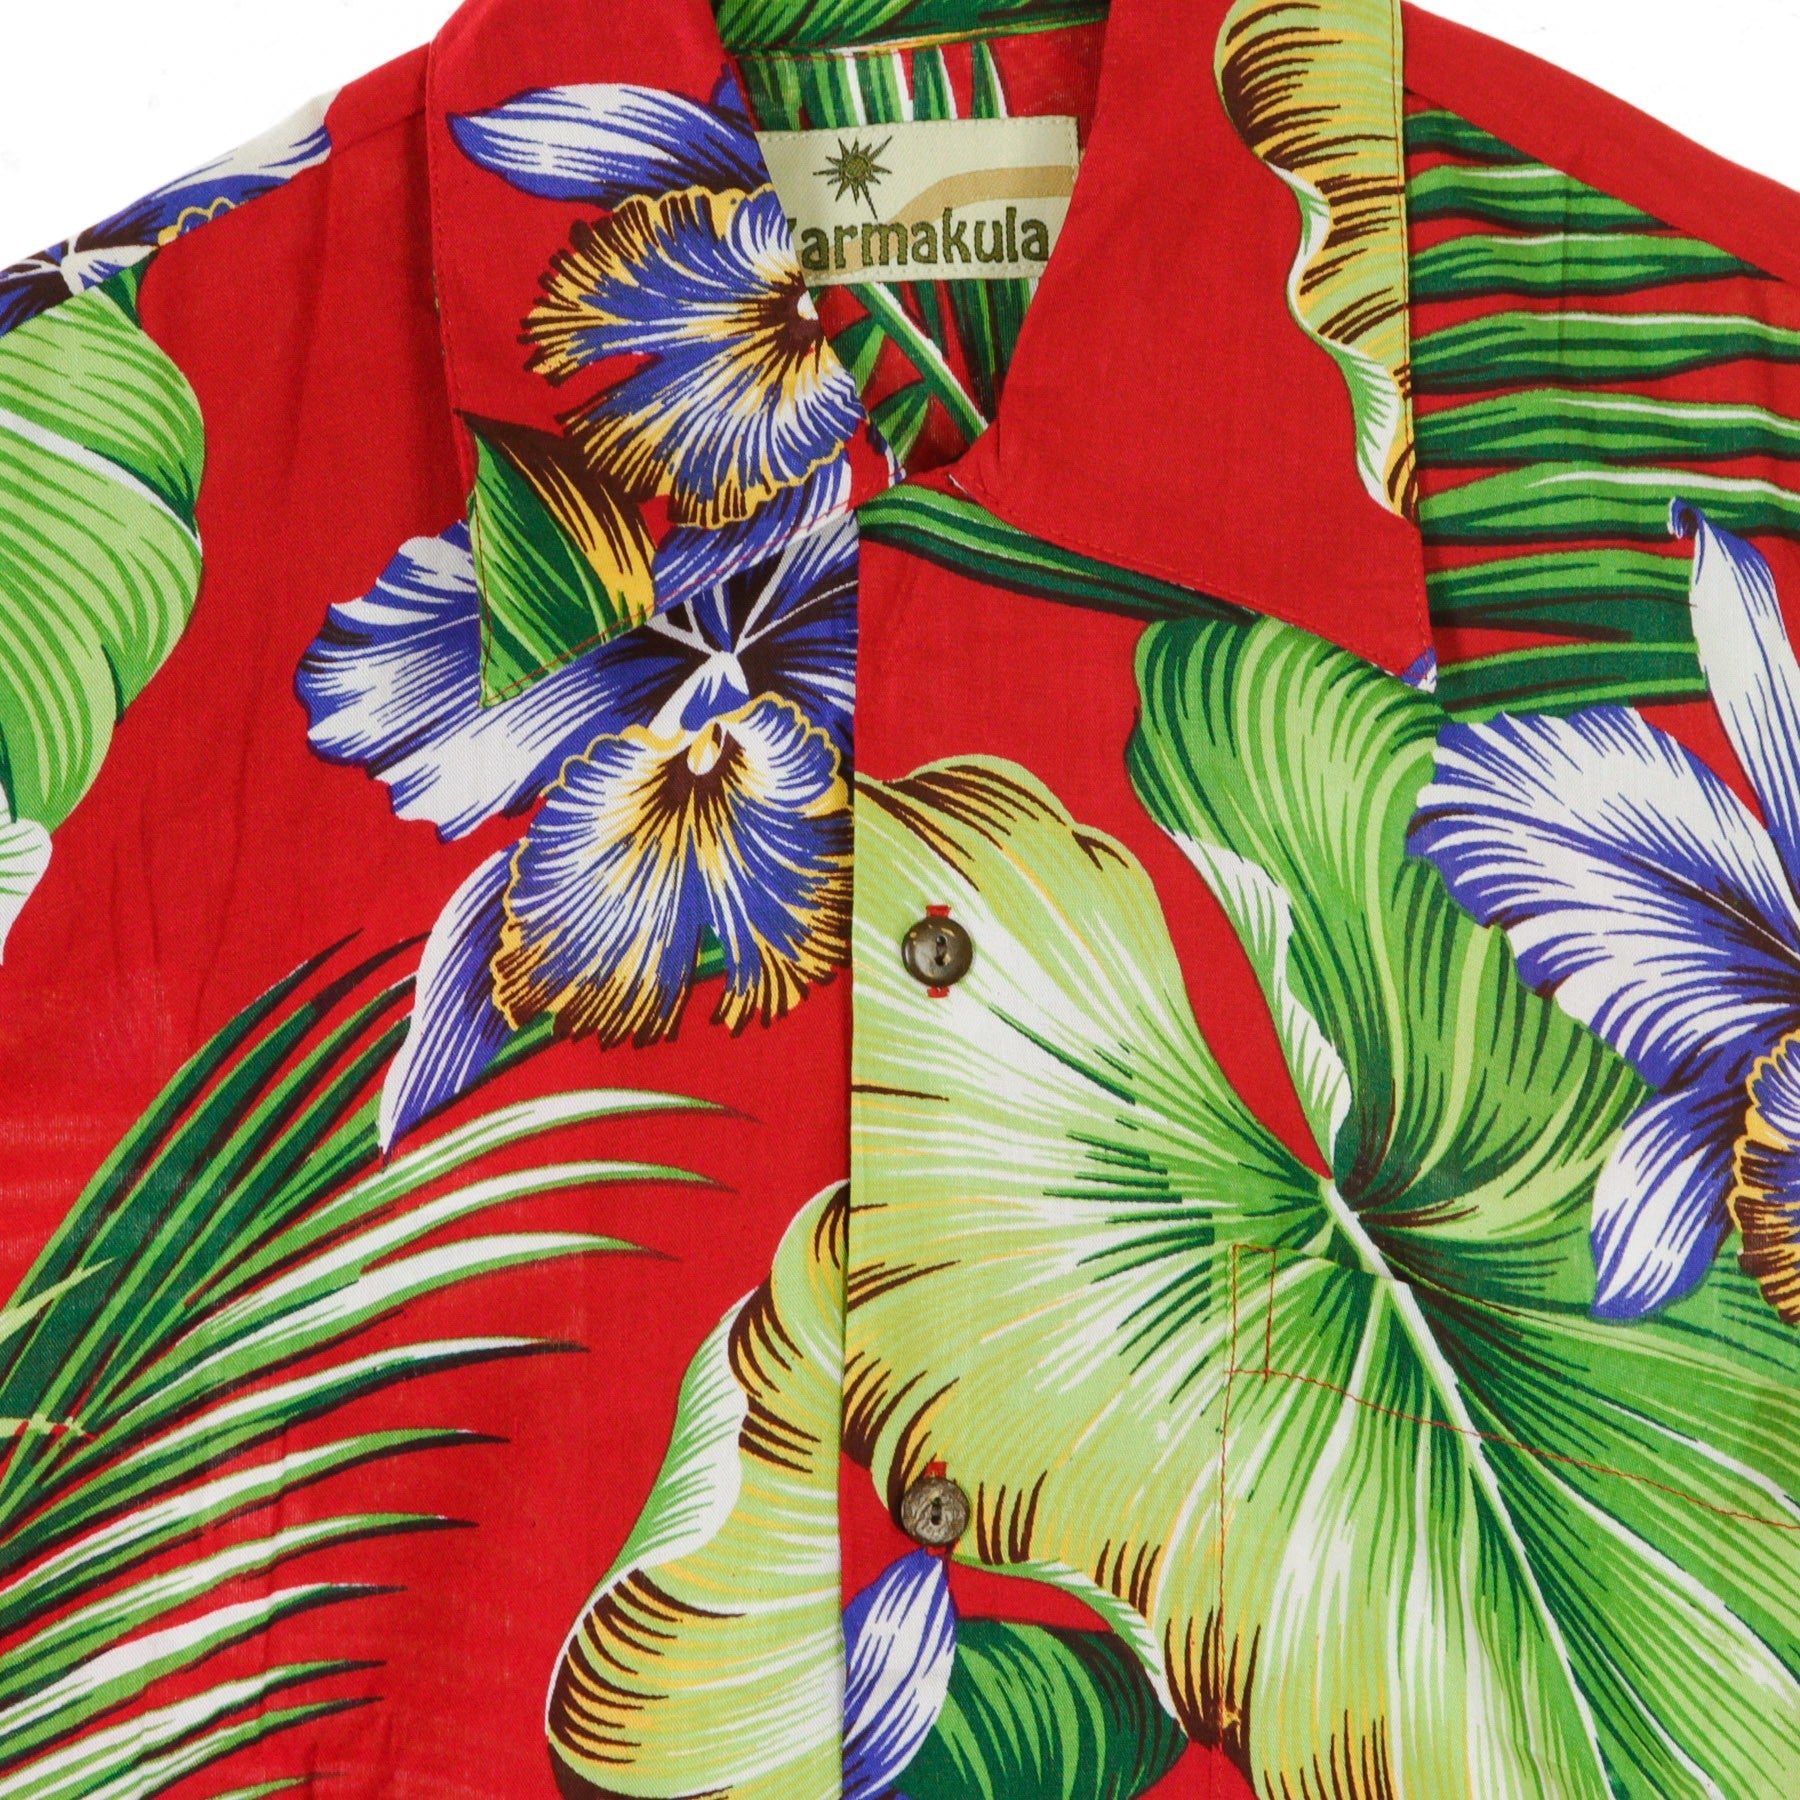 Camicia Manica Corta Uomo Hawaiian Shirt Manoa Red